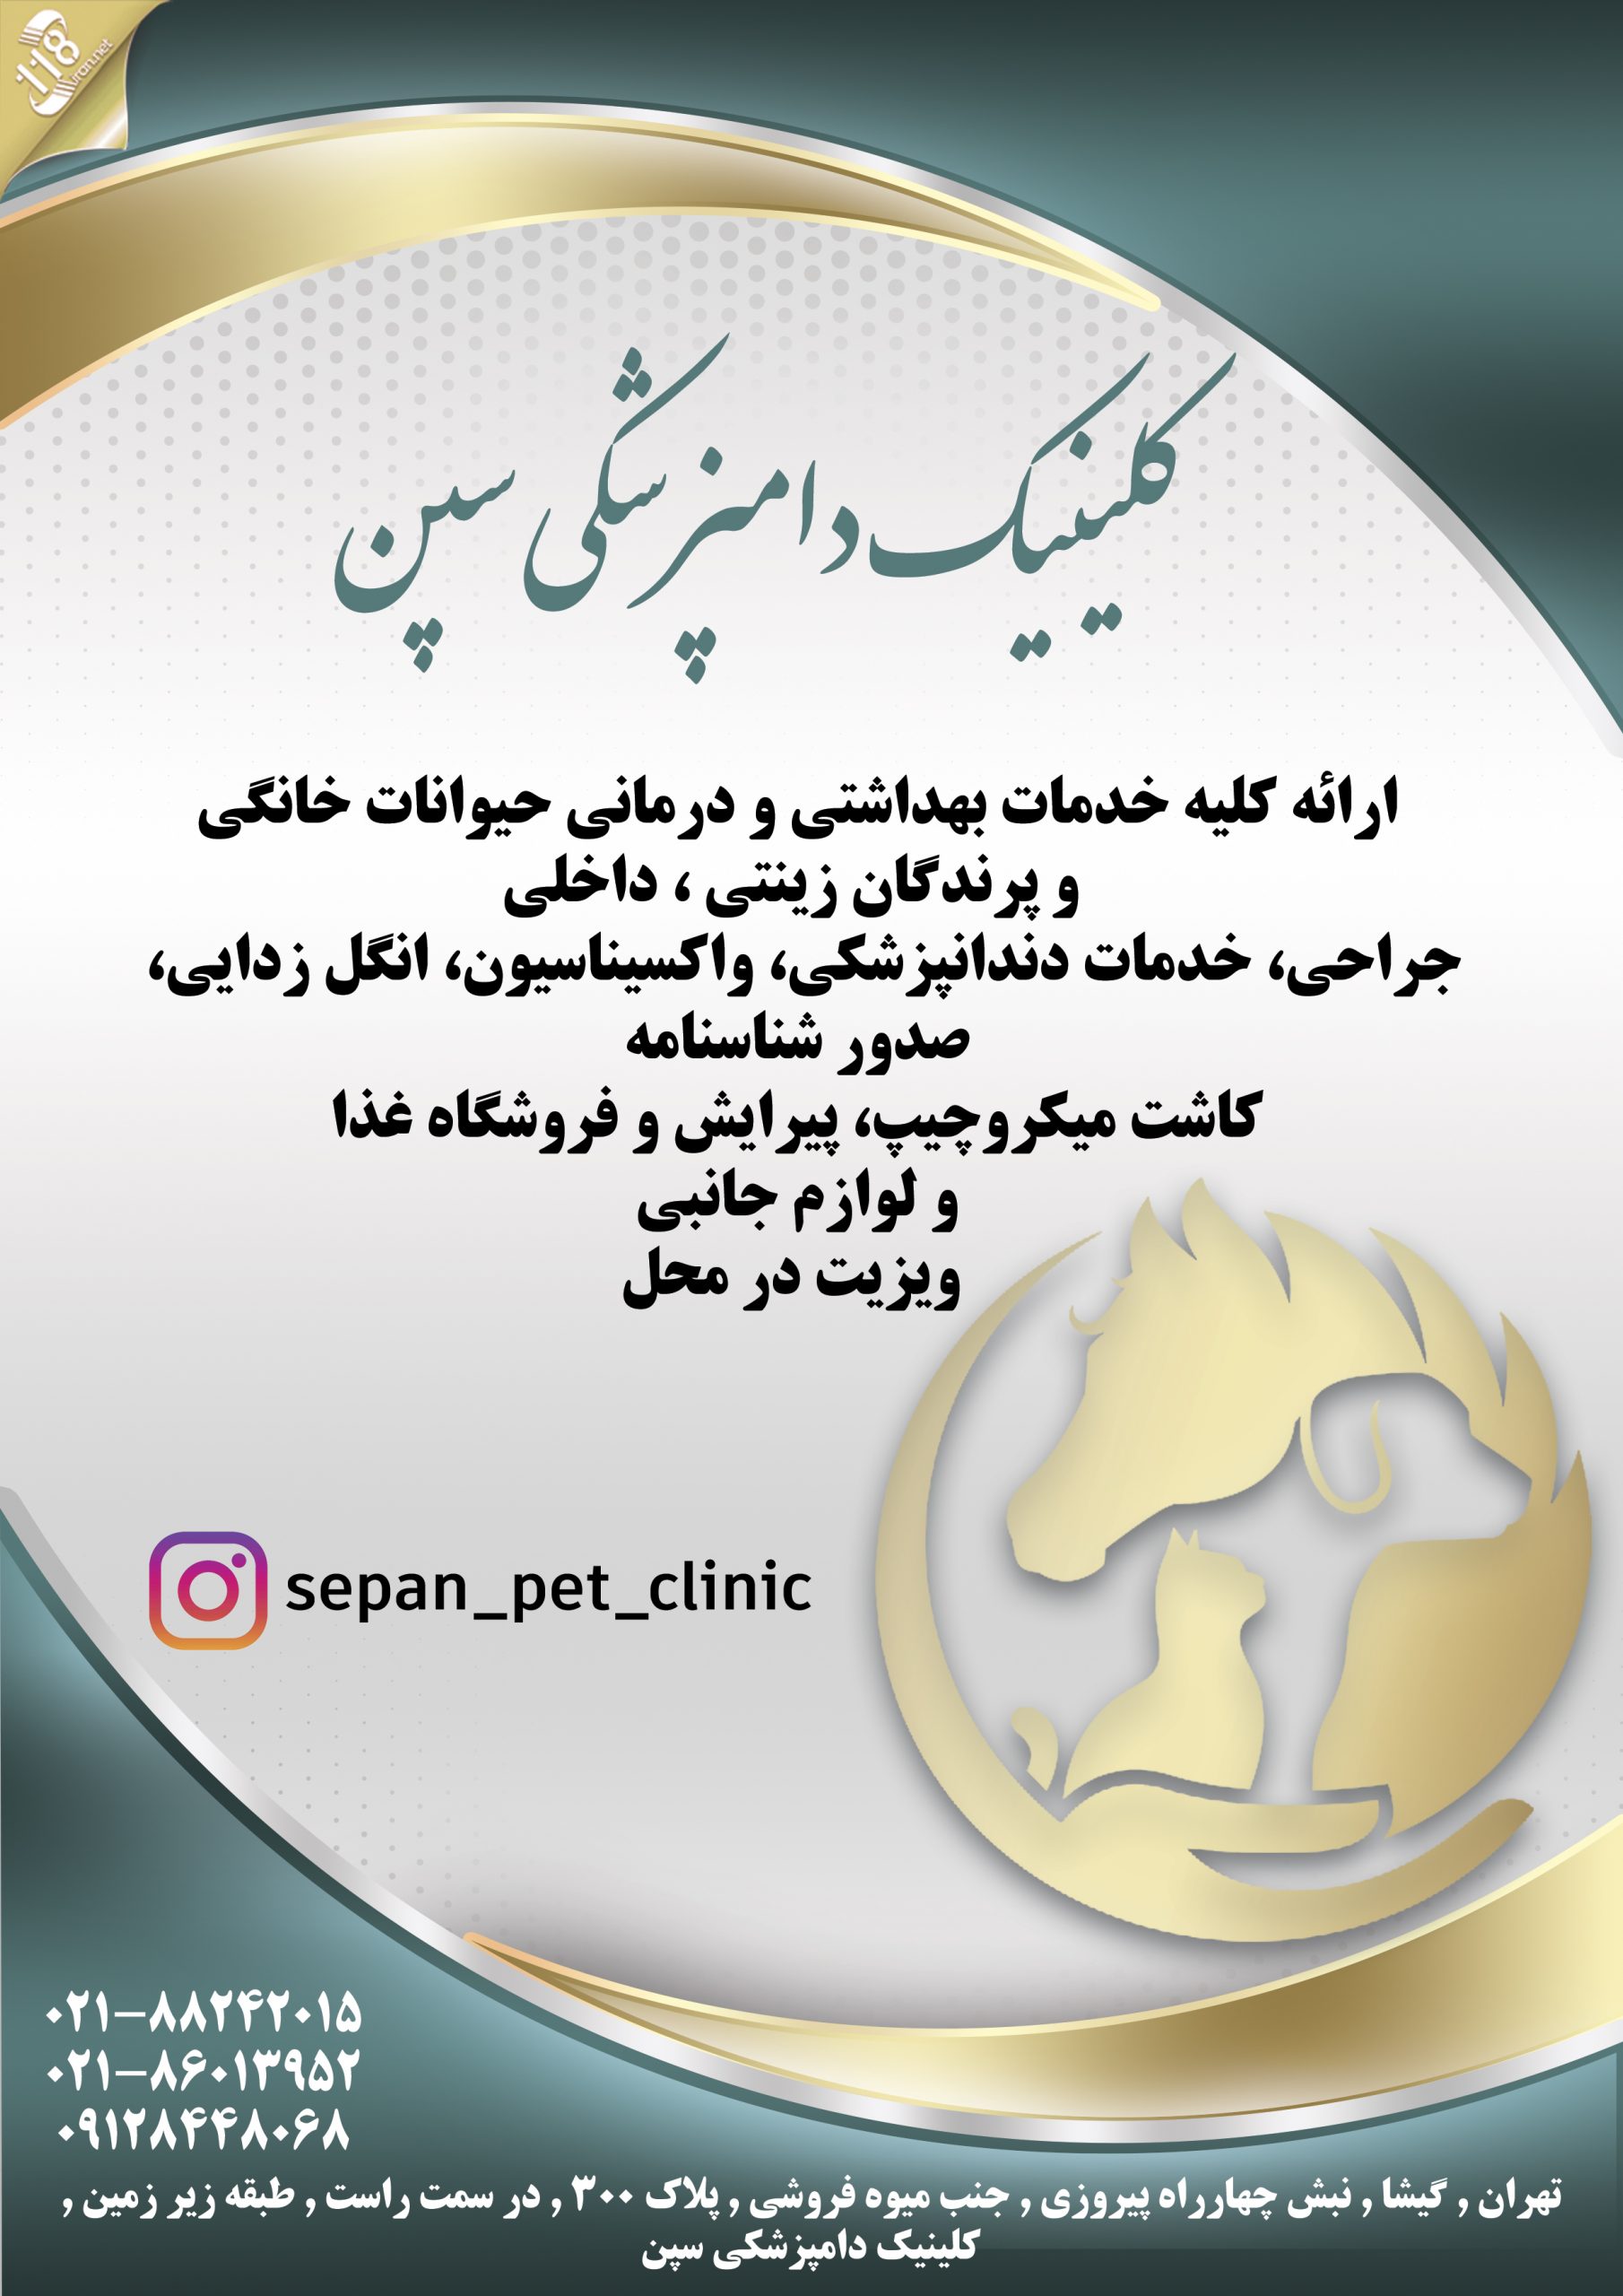  کلینیک دامپزشکی سپن در تهران 